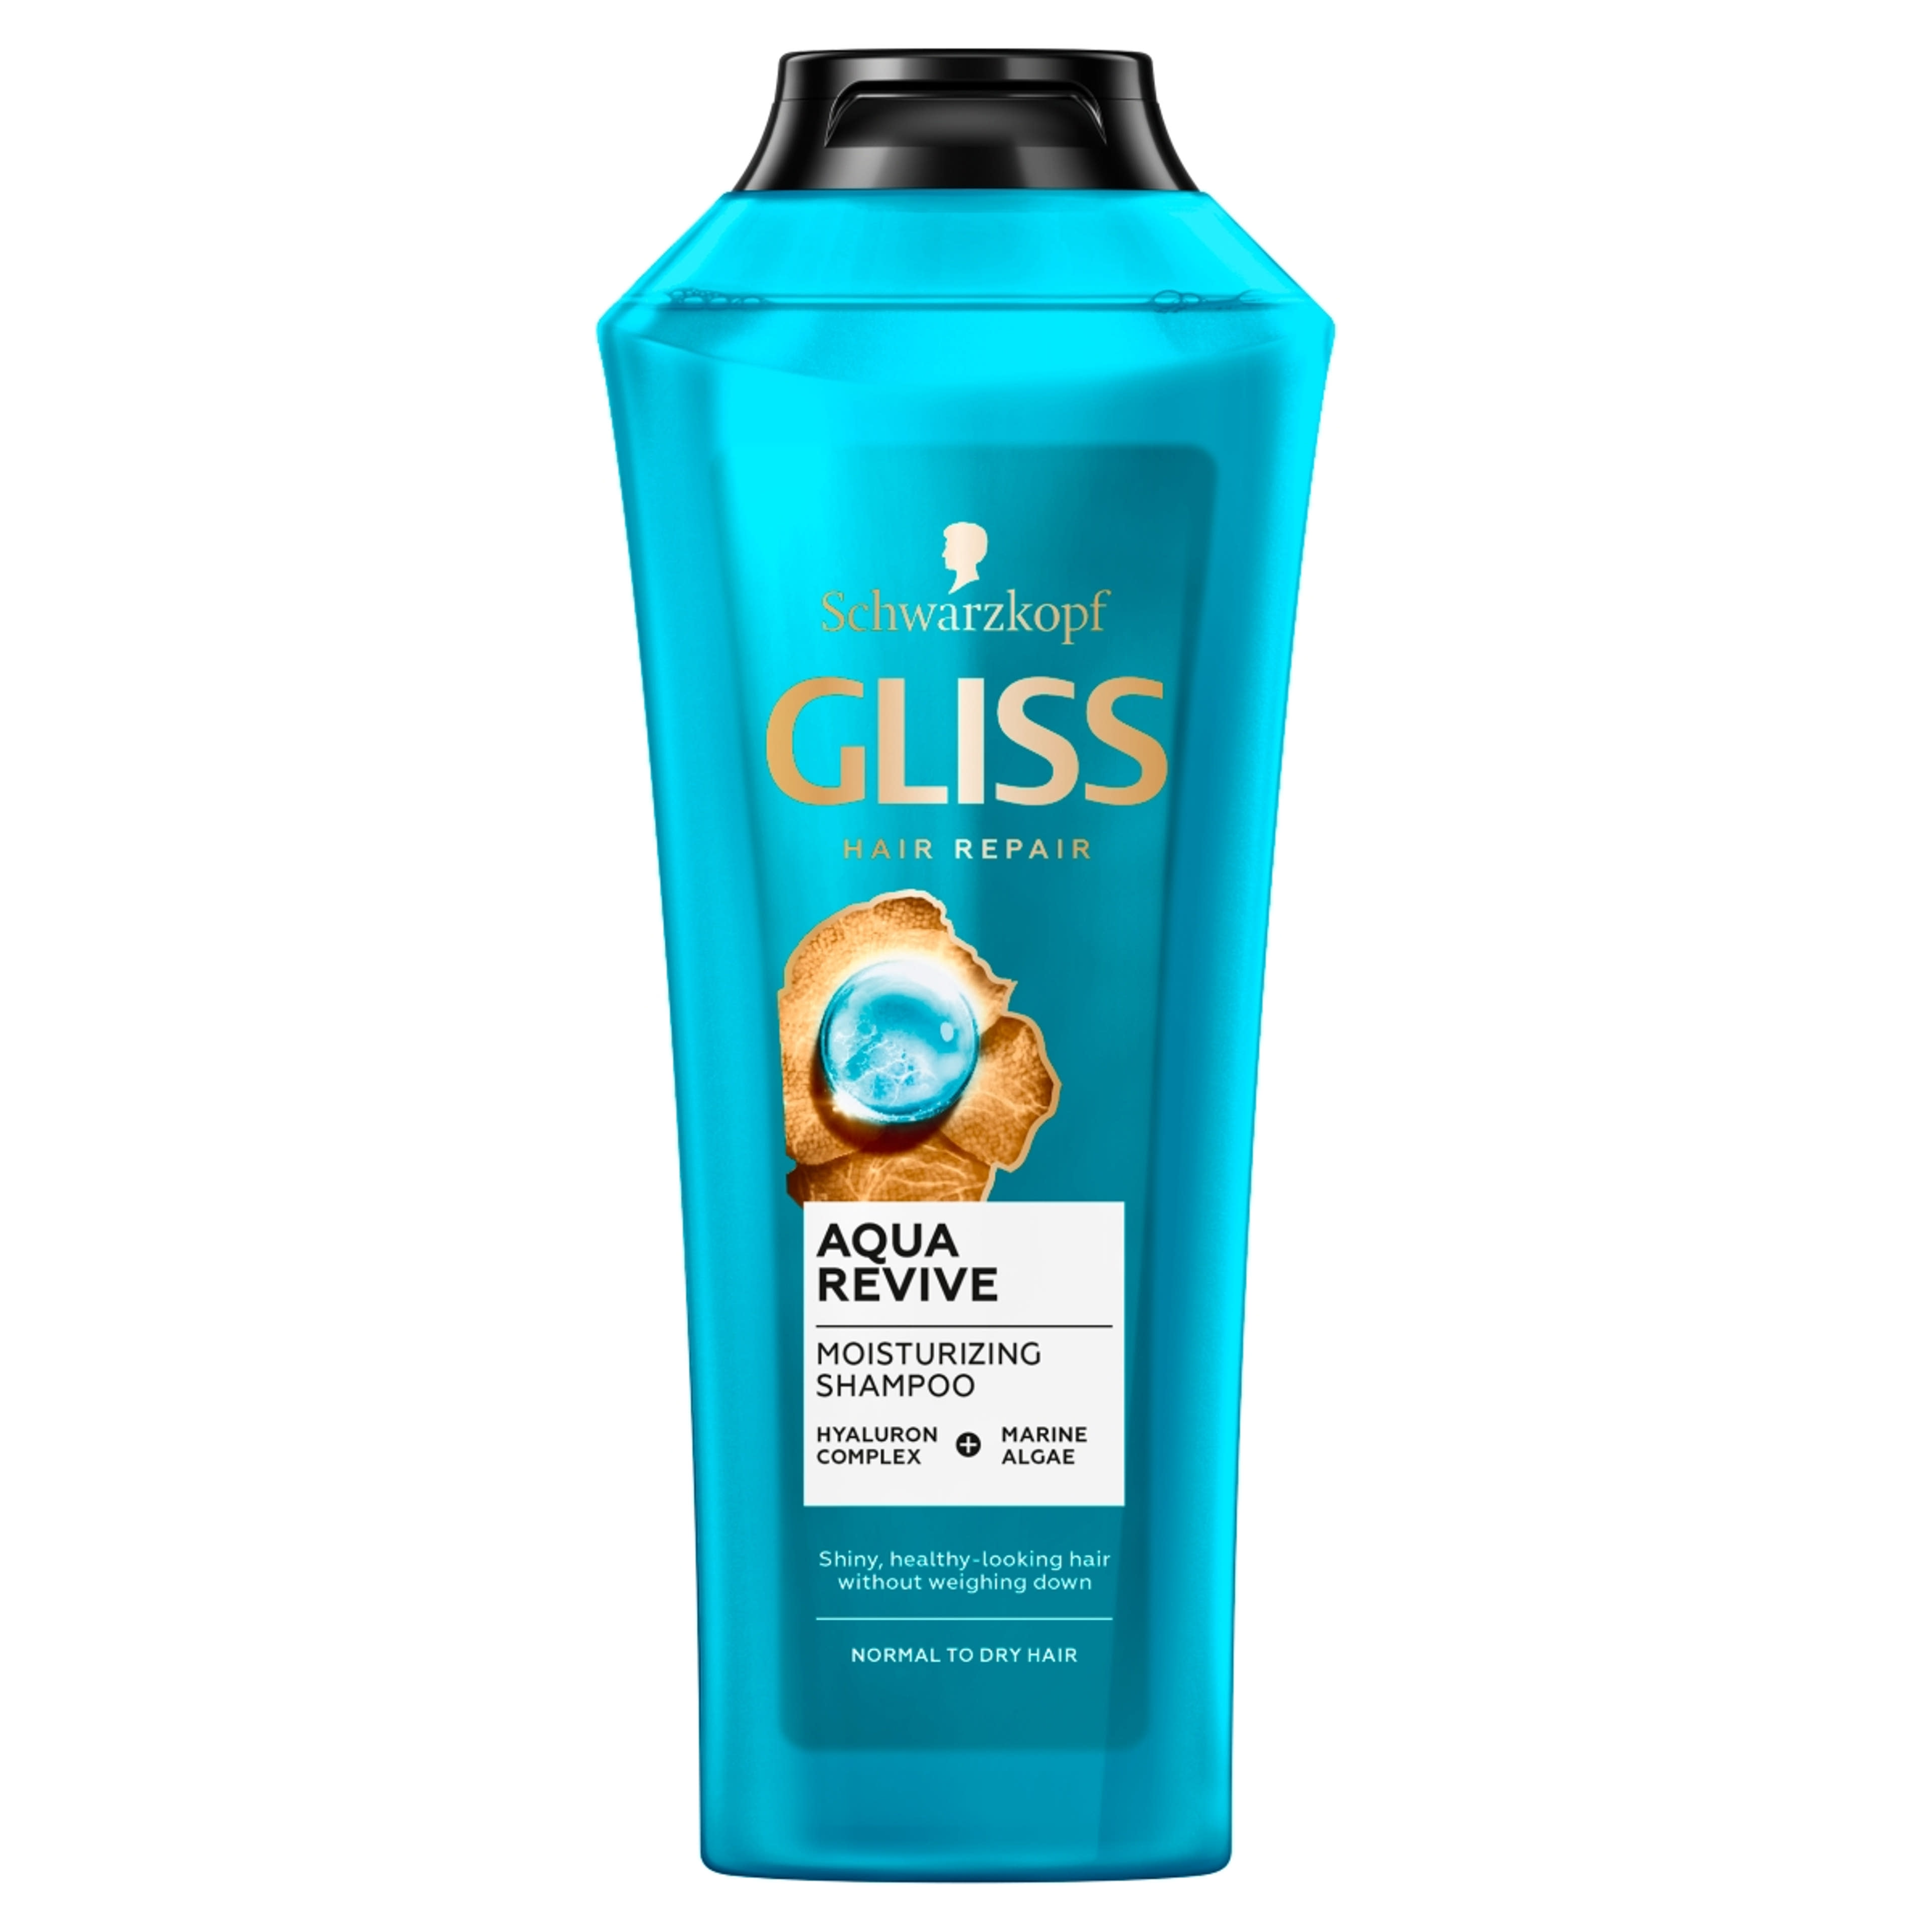 Gliss Aqua Revive sampon - 400 ml